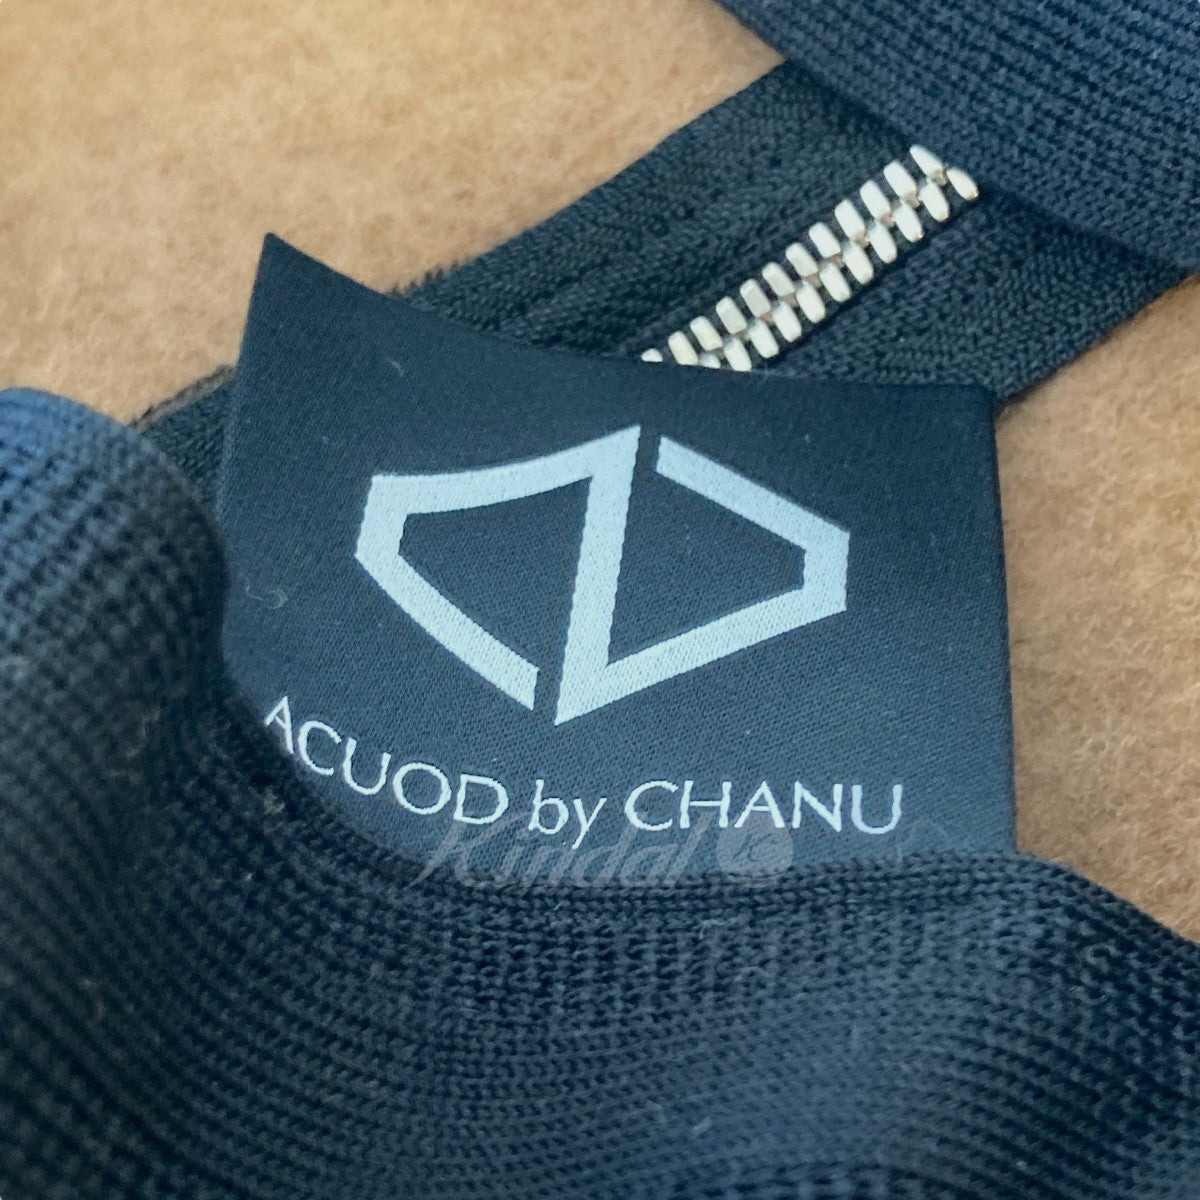 ACUOD by CHANU(アクオド バイ チャヌ) zip beret ベレー帽 ブラウン 